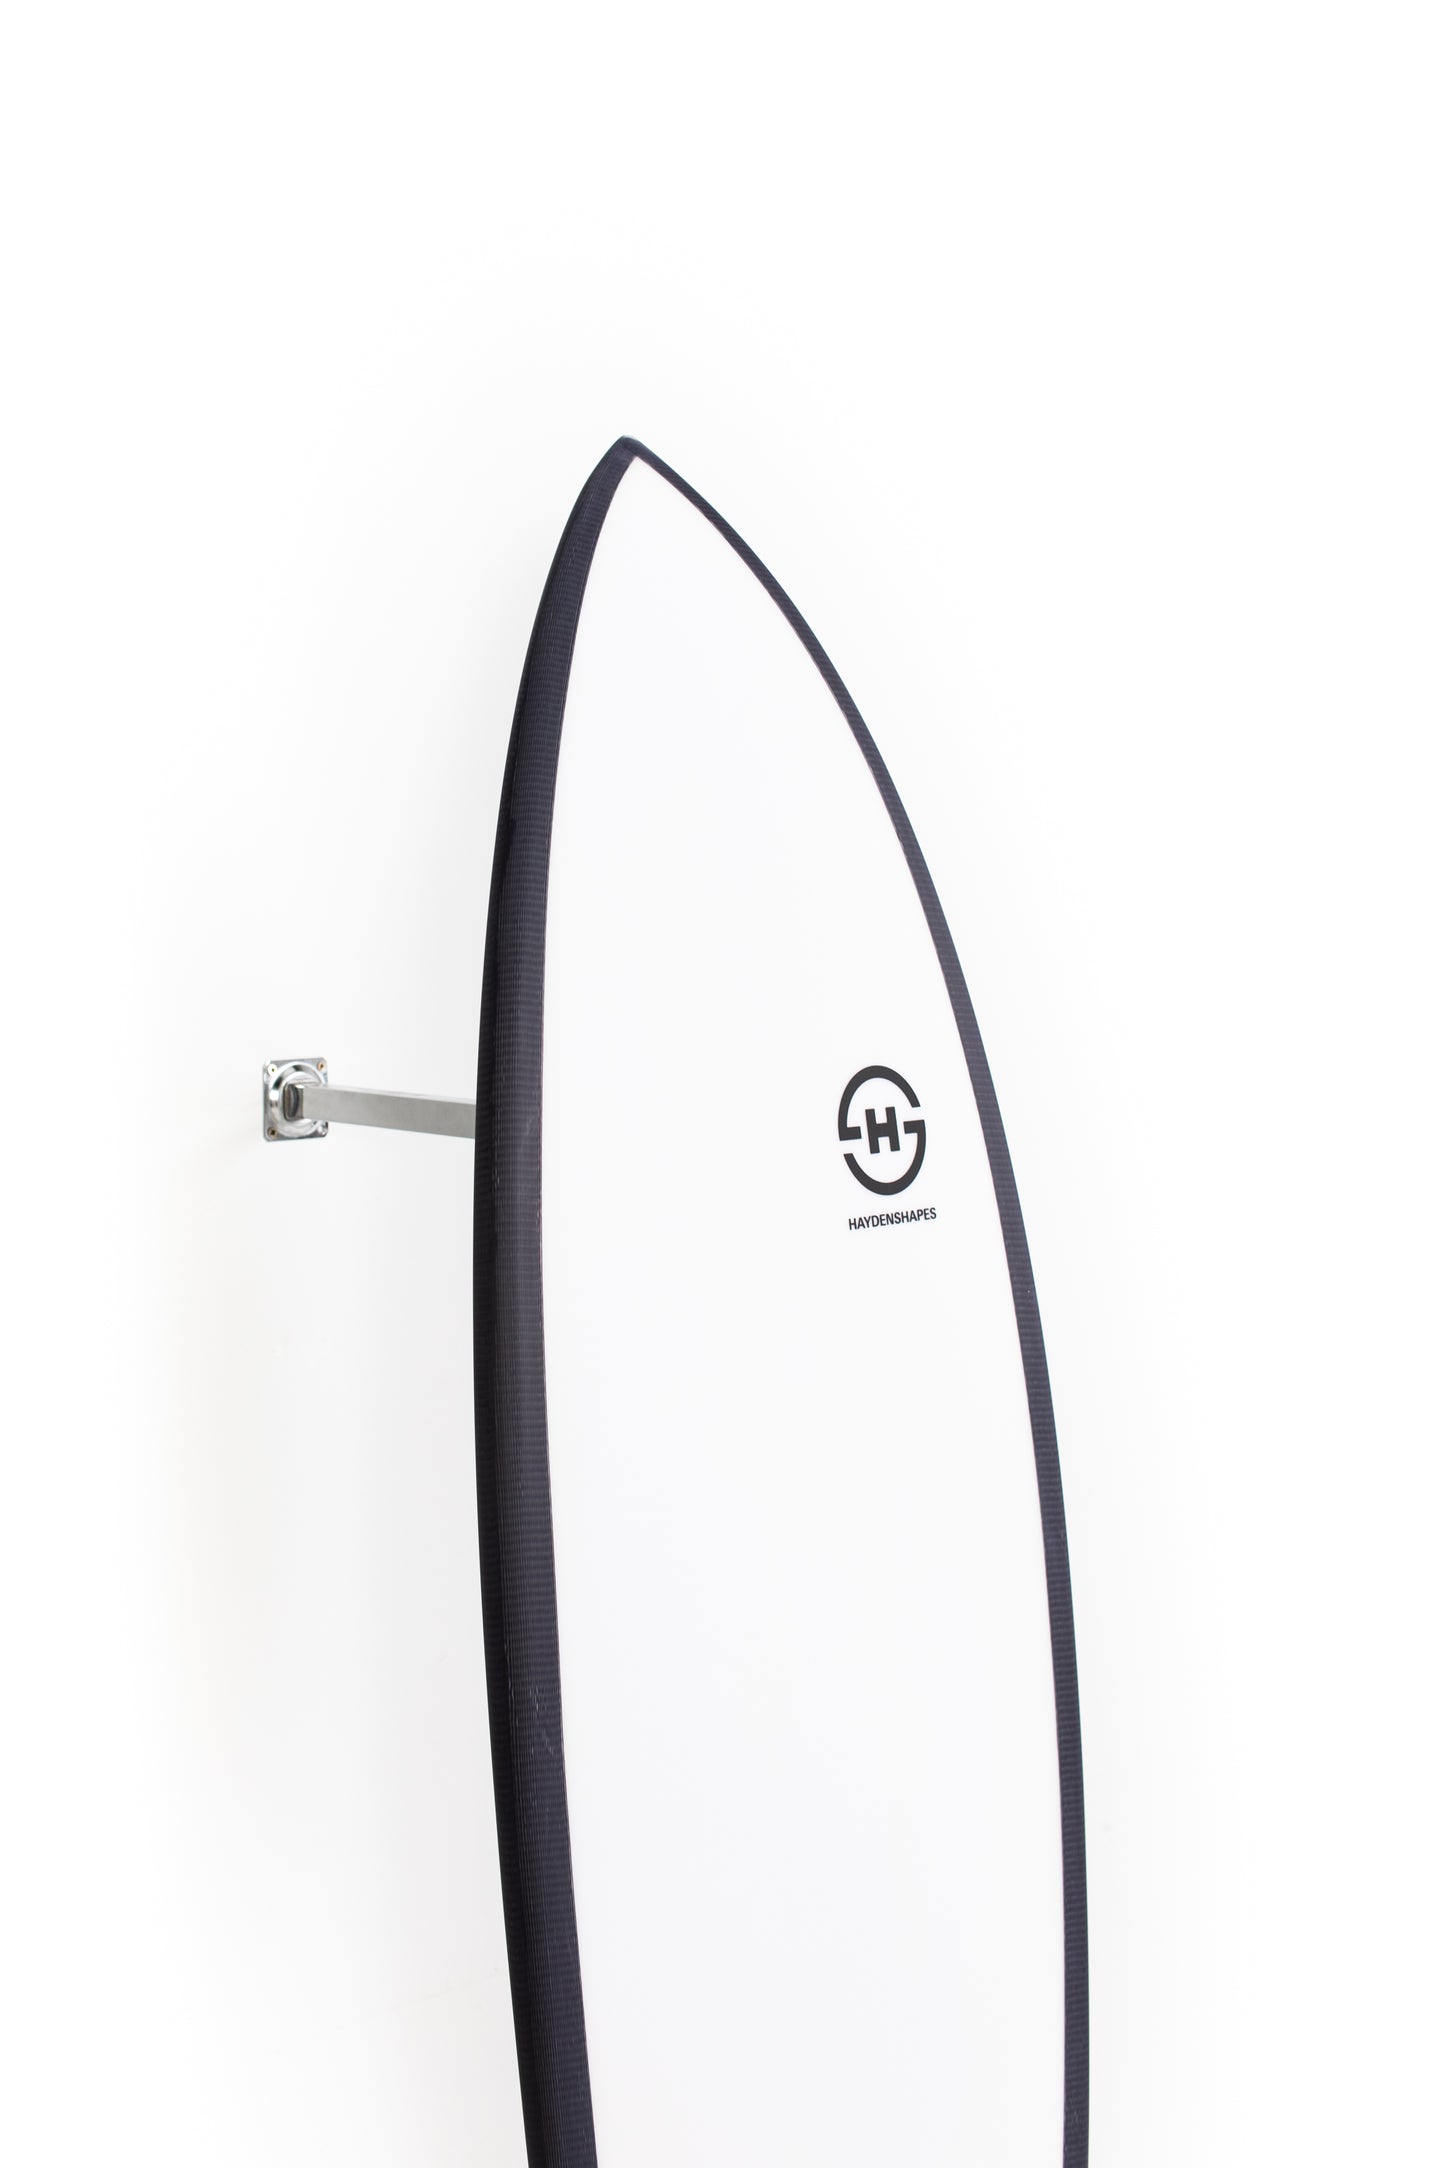 
                  
                    Pukas Surf Shop - HaydenShapes Surfboard - HYPTO KRYPTO TWIN PIN - 5'8" X 20" X 2 1/2" - 30.95L
                  
                